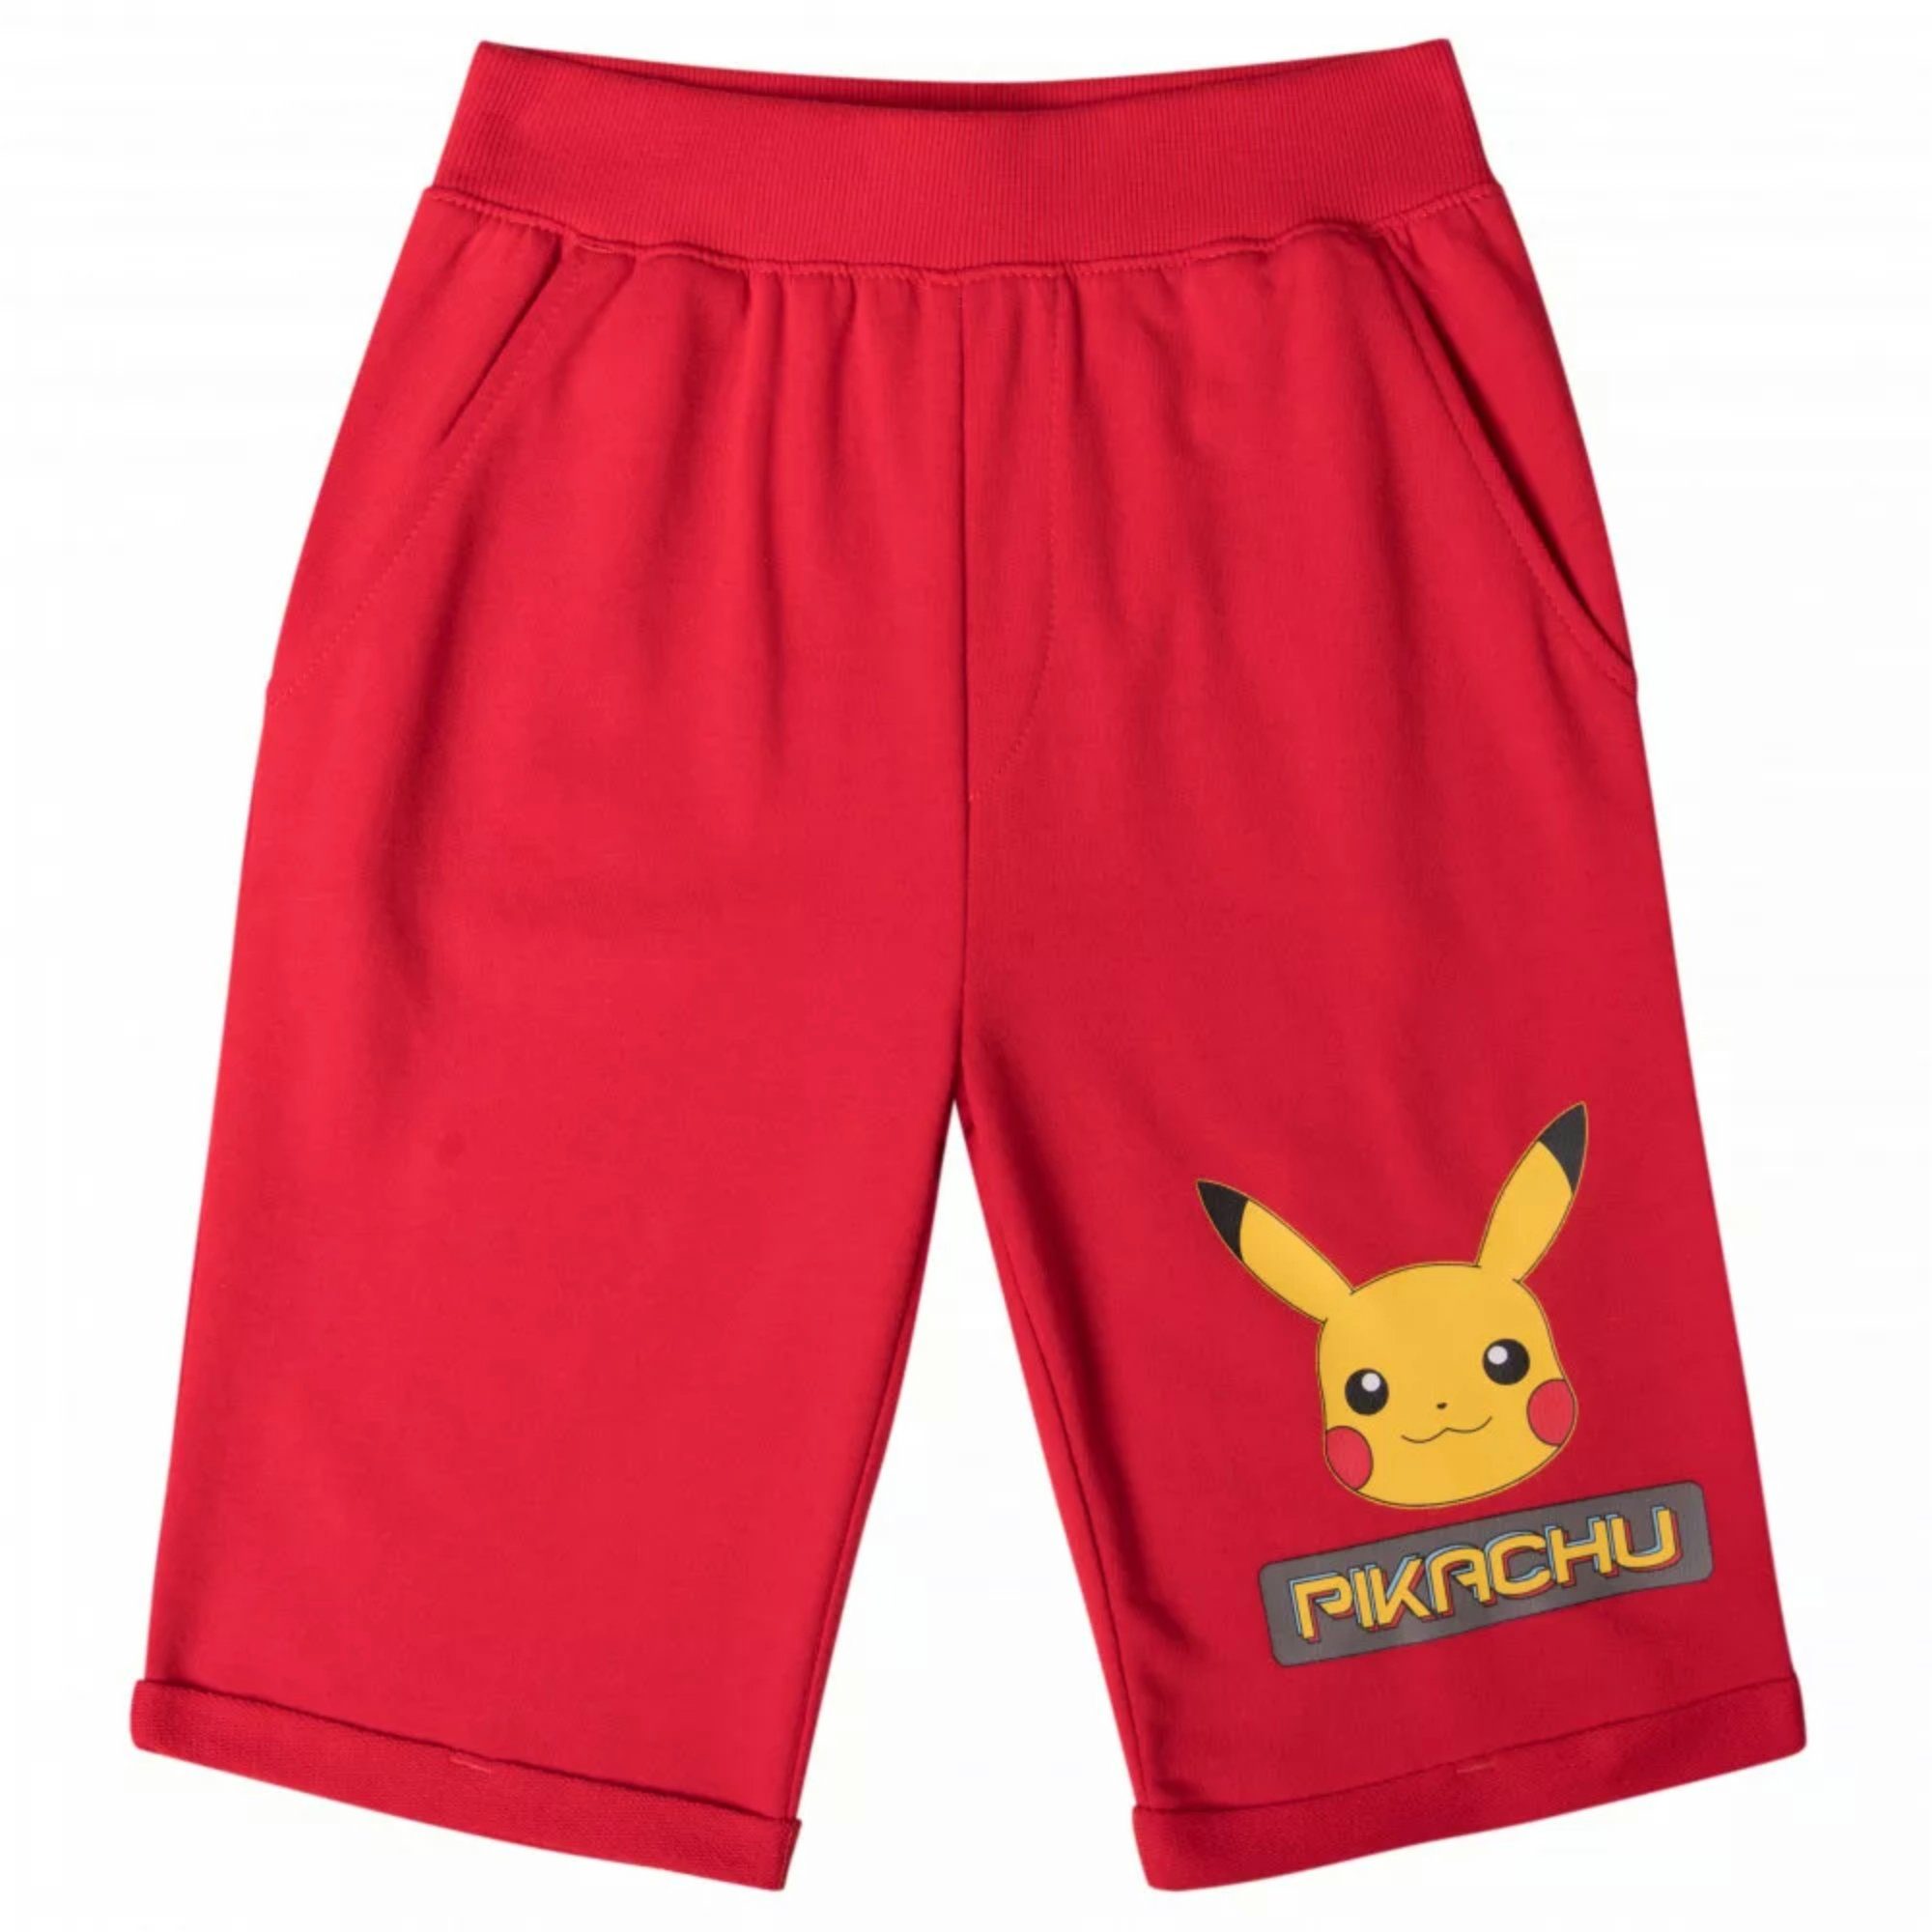 POKÉMON Shorts Pokemon Pikachu Jungen Kinder Sommer Shorts Gr. 110 biis 152, Rot Grau